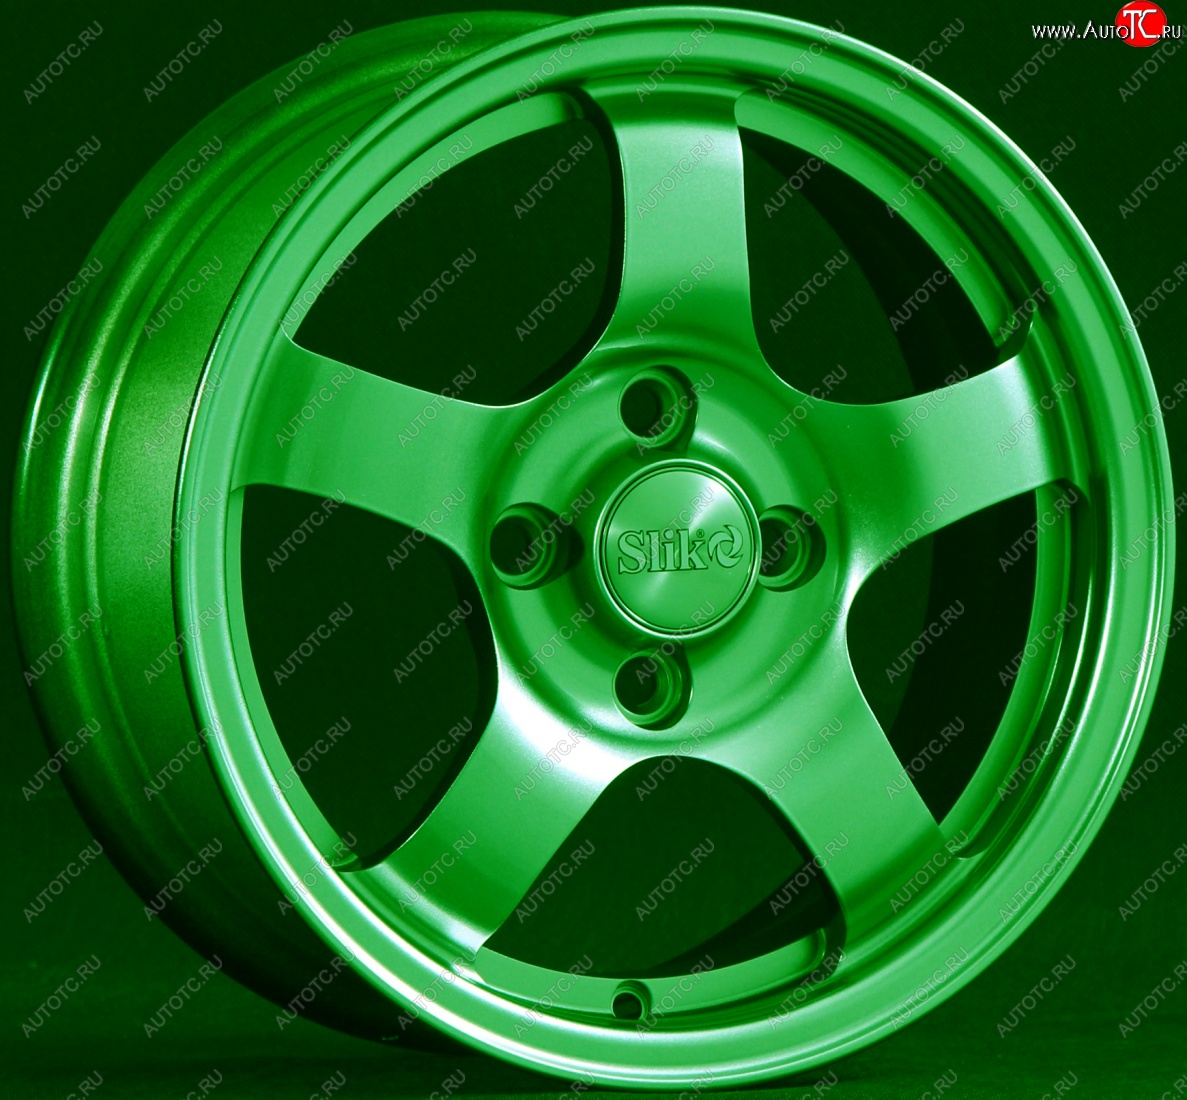 12 799 р. Кованый диск Slik Classik 6x14 (Зелёный GREEN) Уаз 315195 Хантер (2003-2024) 5x108.0xDIA108.0xET20.0 (Цвет: Зелёный GREEN)